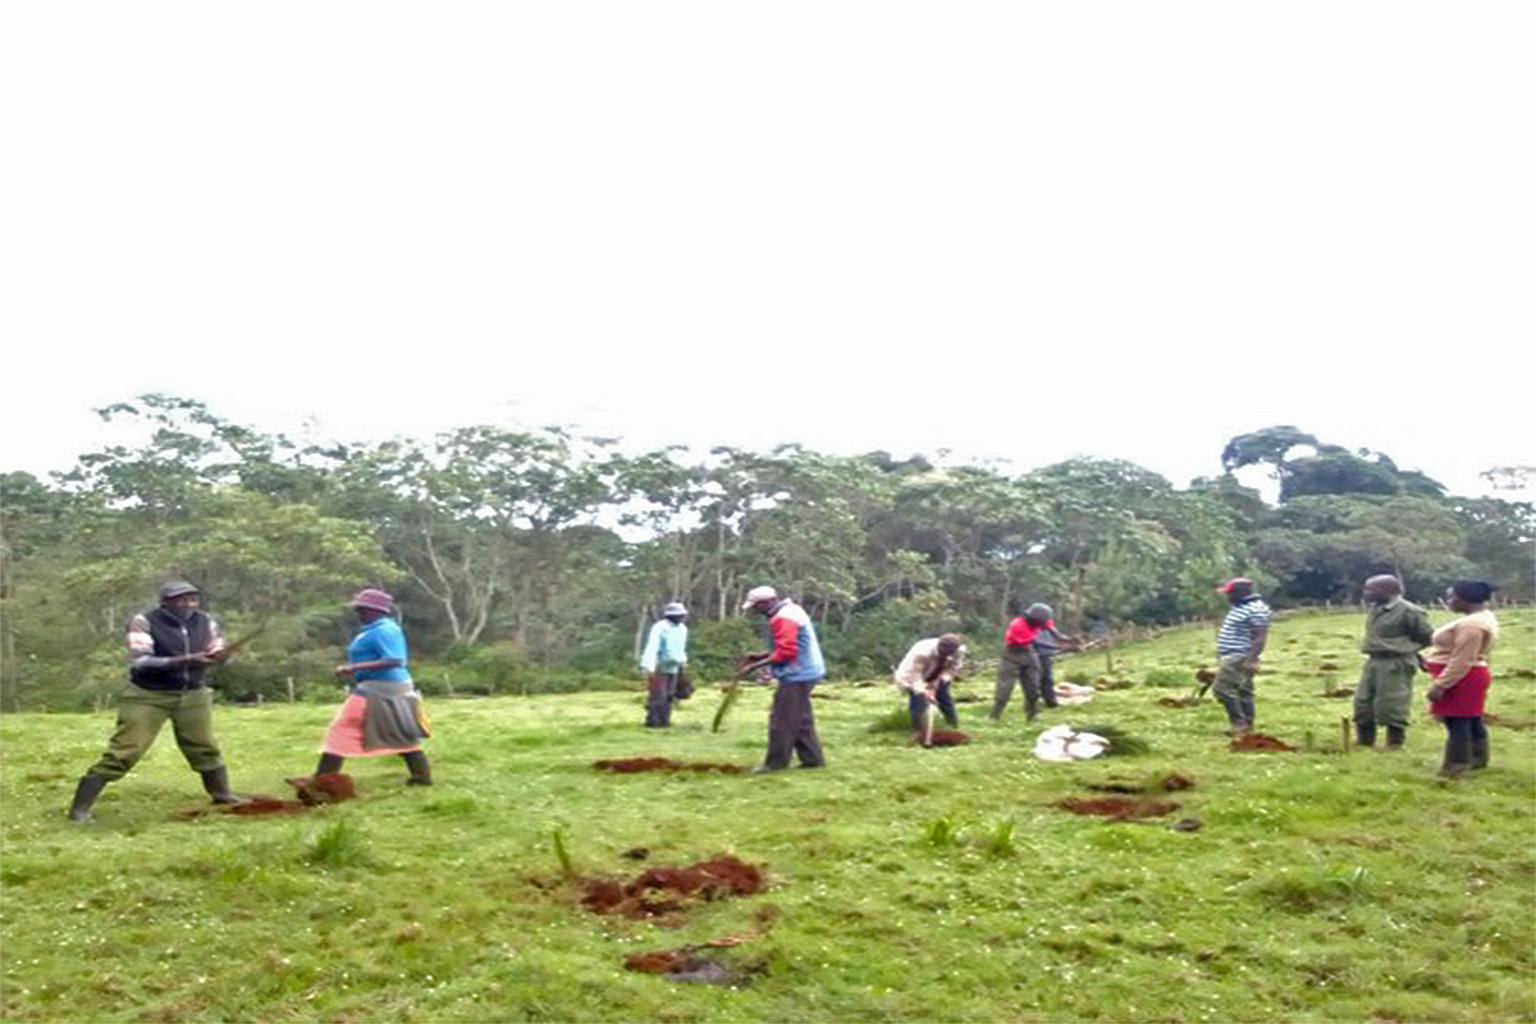 Community members planting trees.